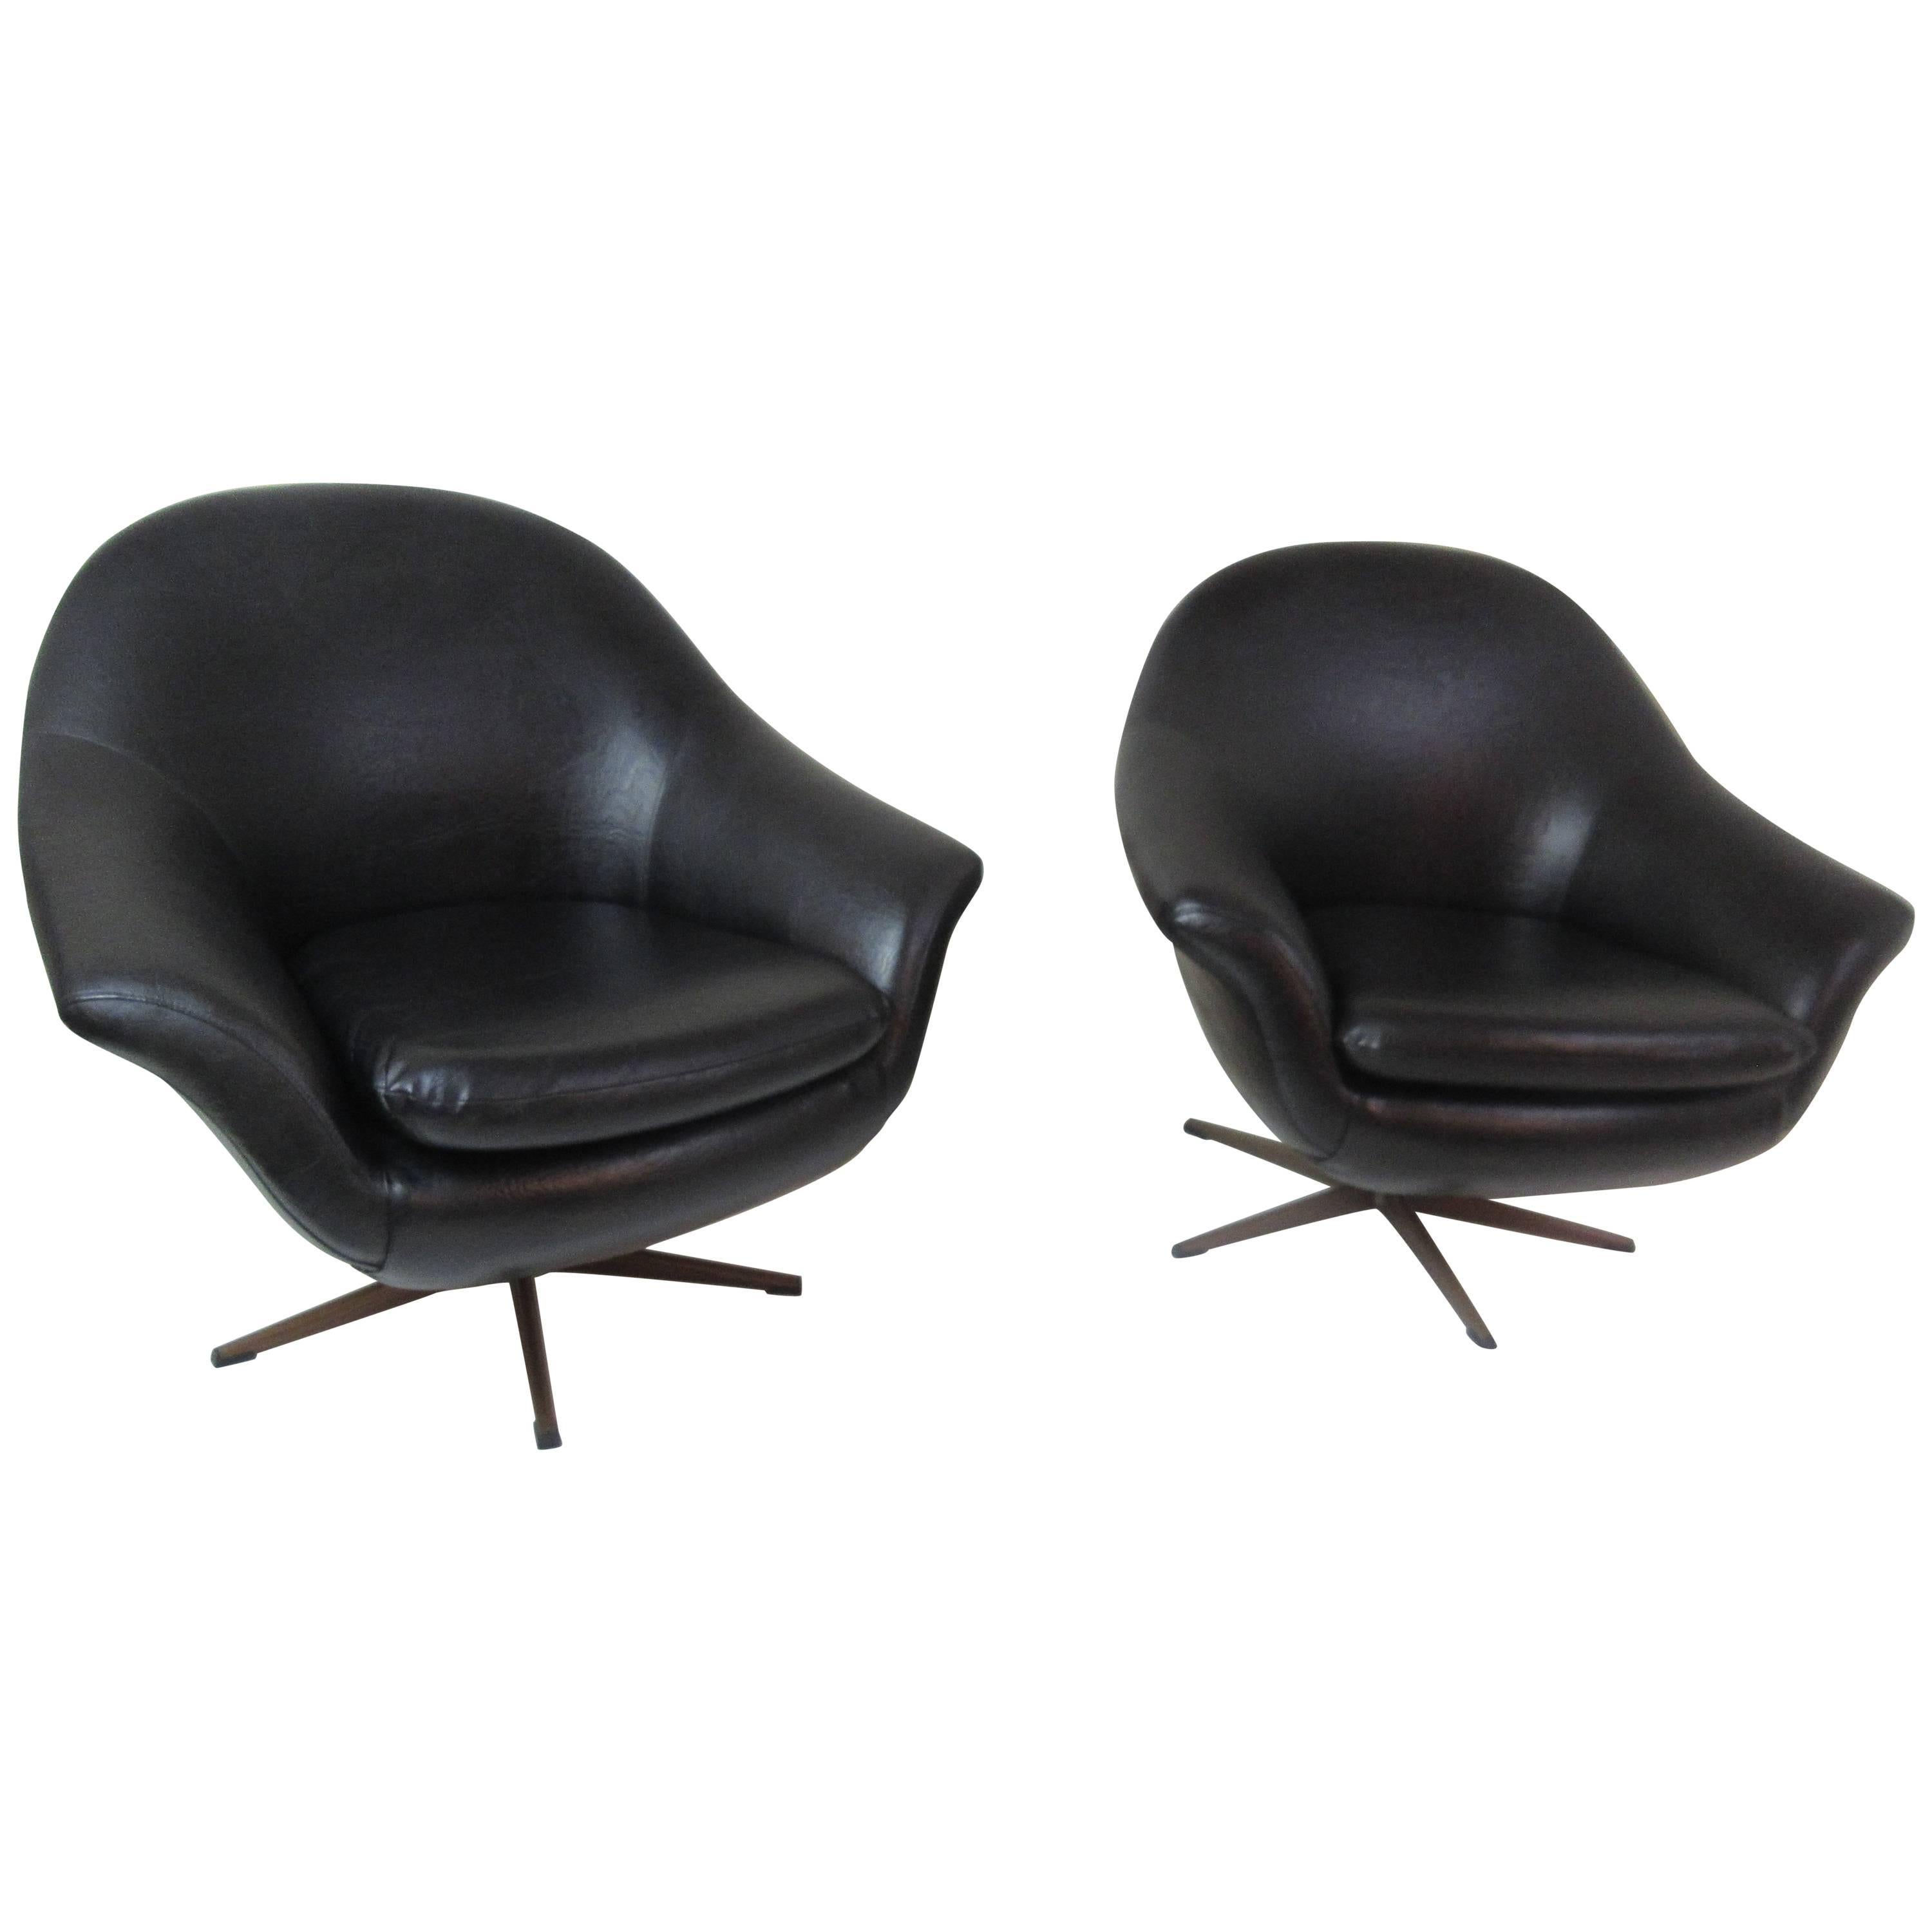 Overman Pair of Swivel Chairs in Black Vinyl